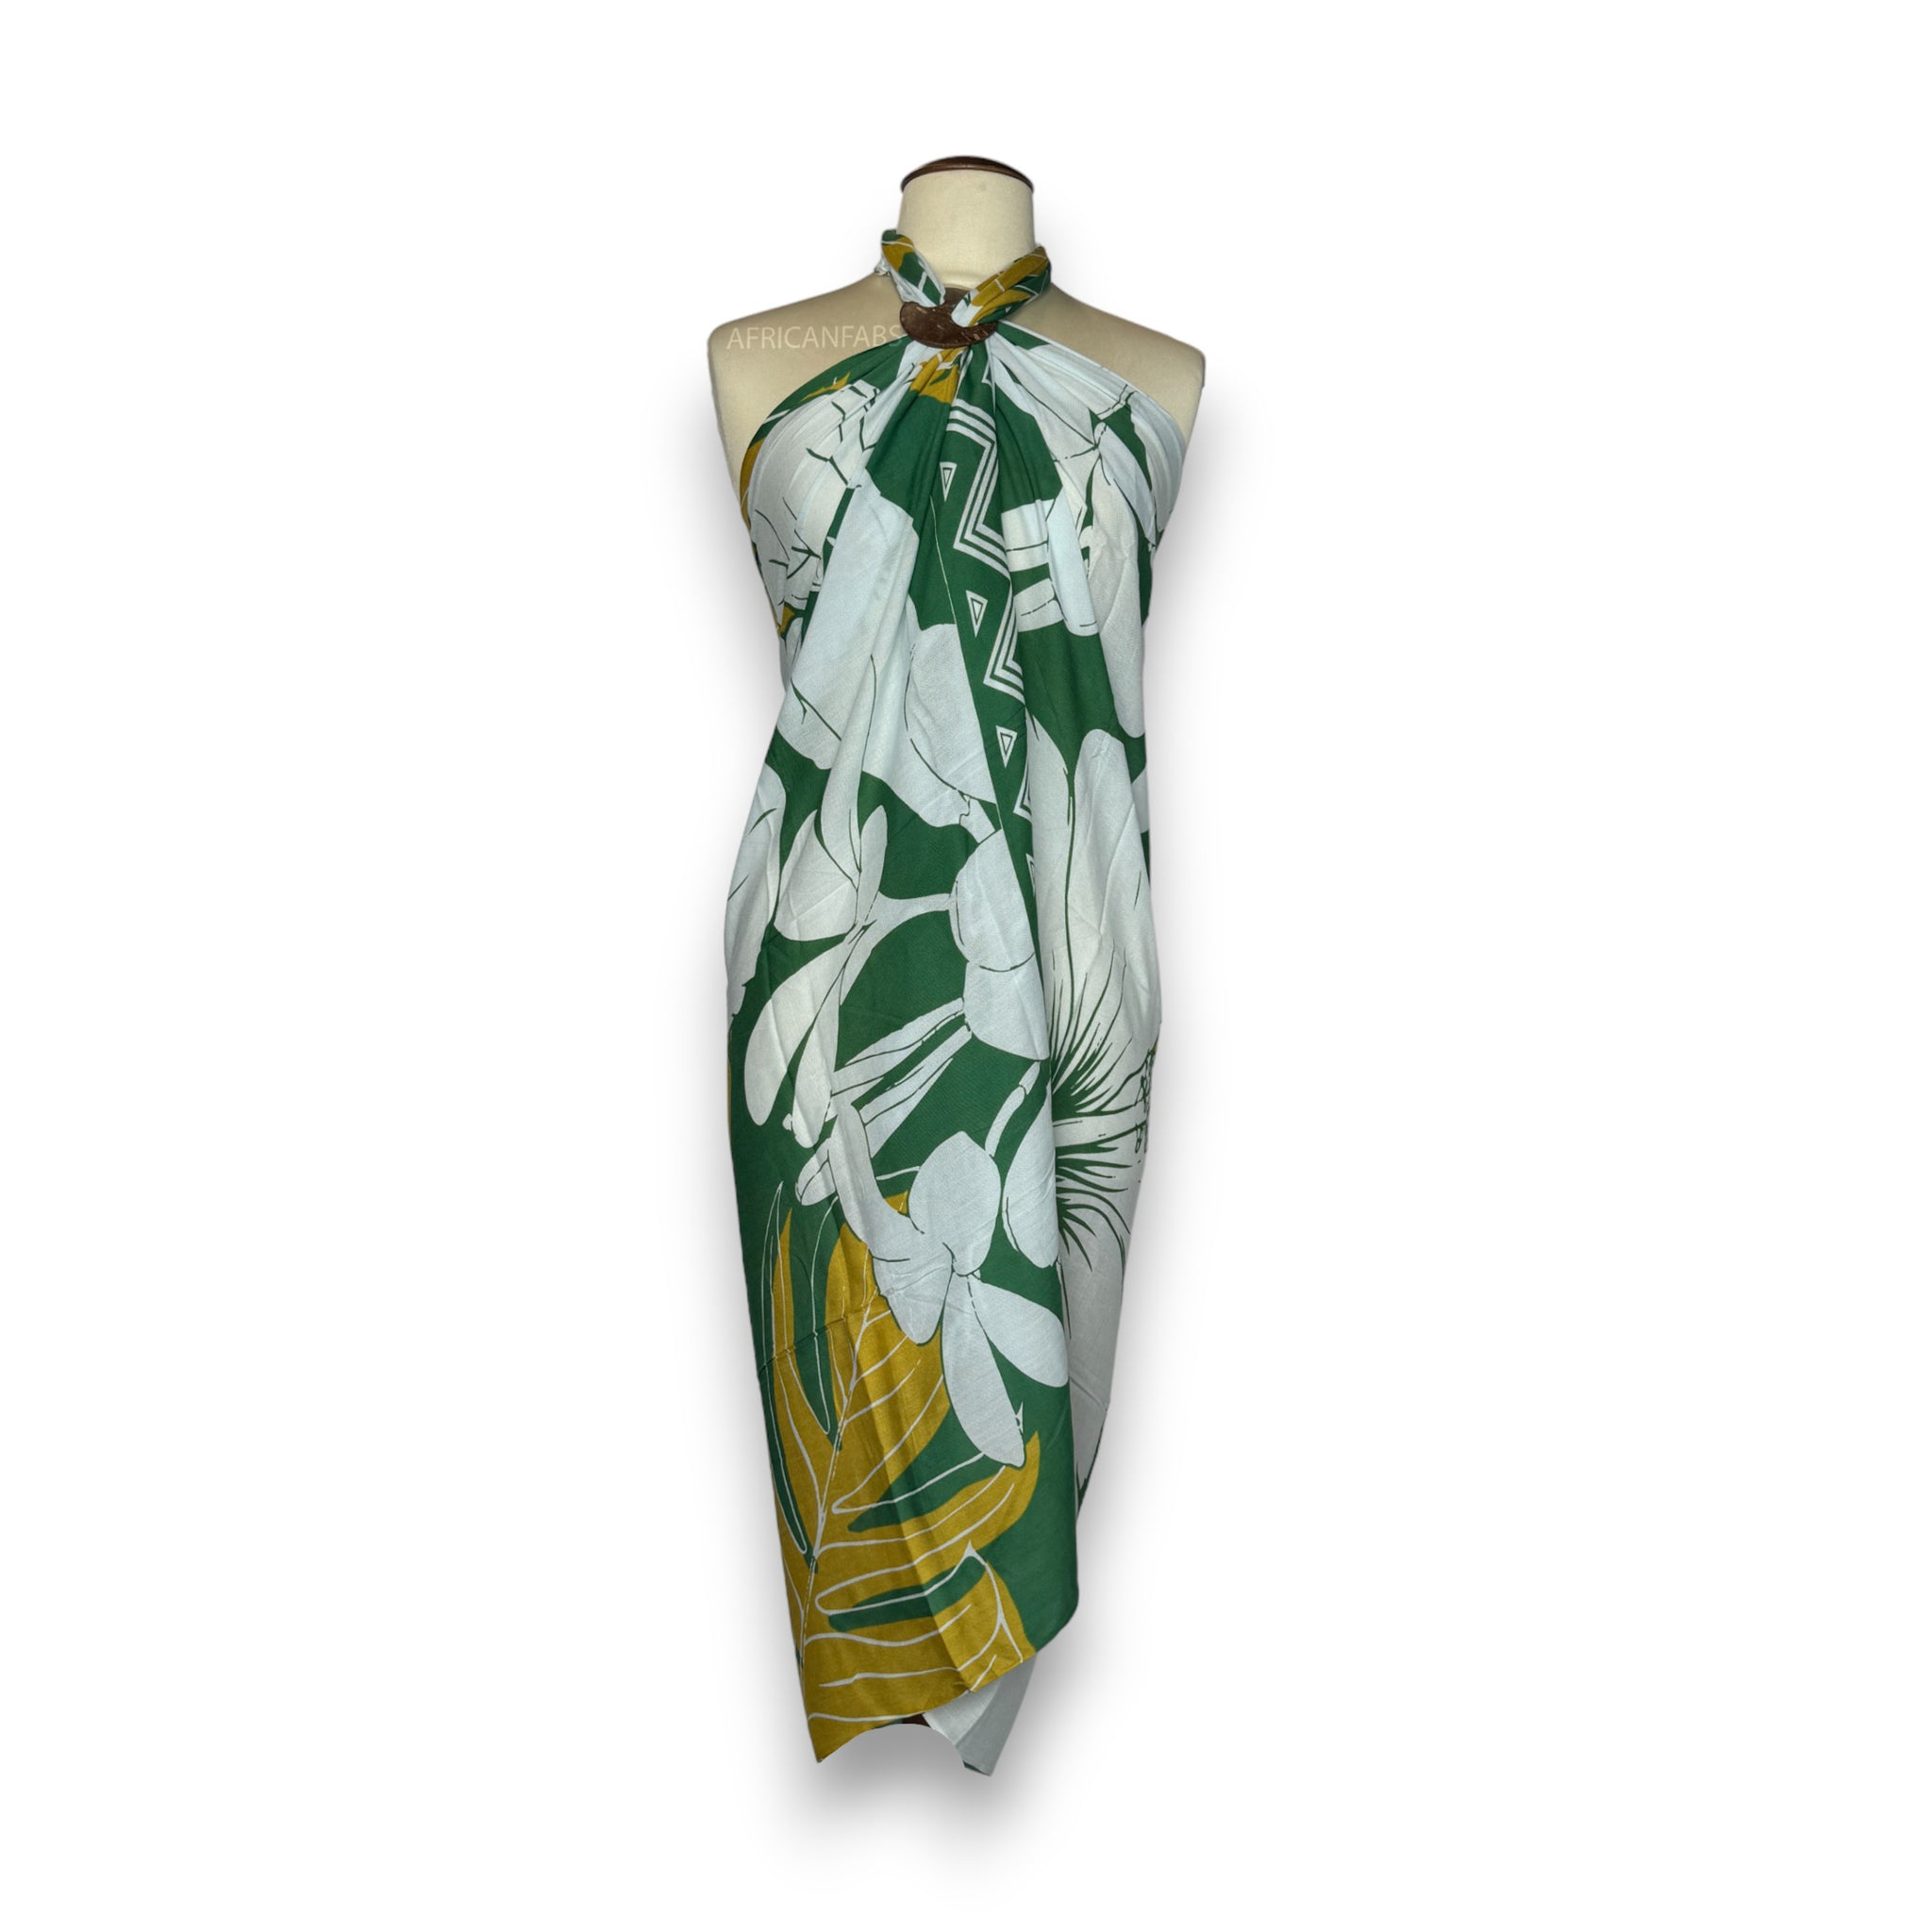 Sarong / pareo - Beachwear wrap skirt - White / green hibiscus flower